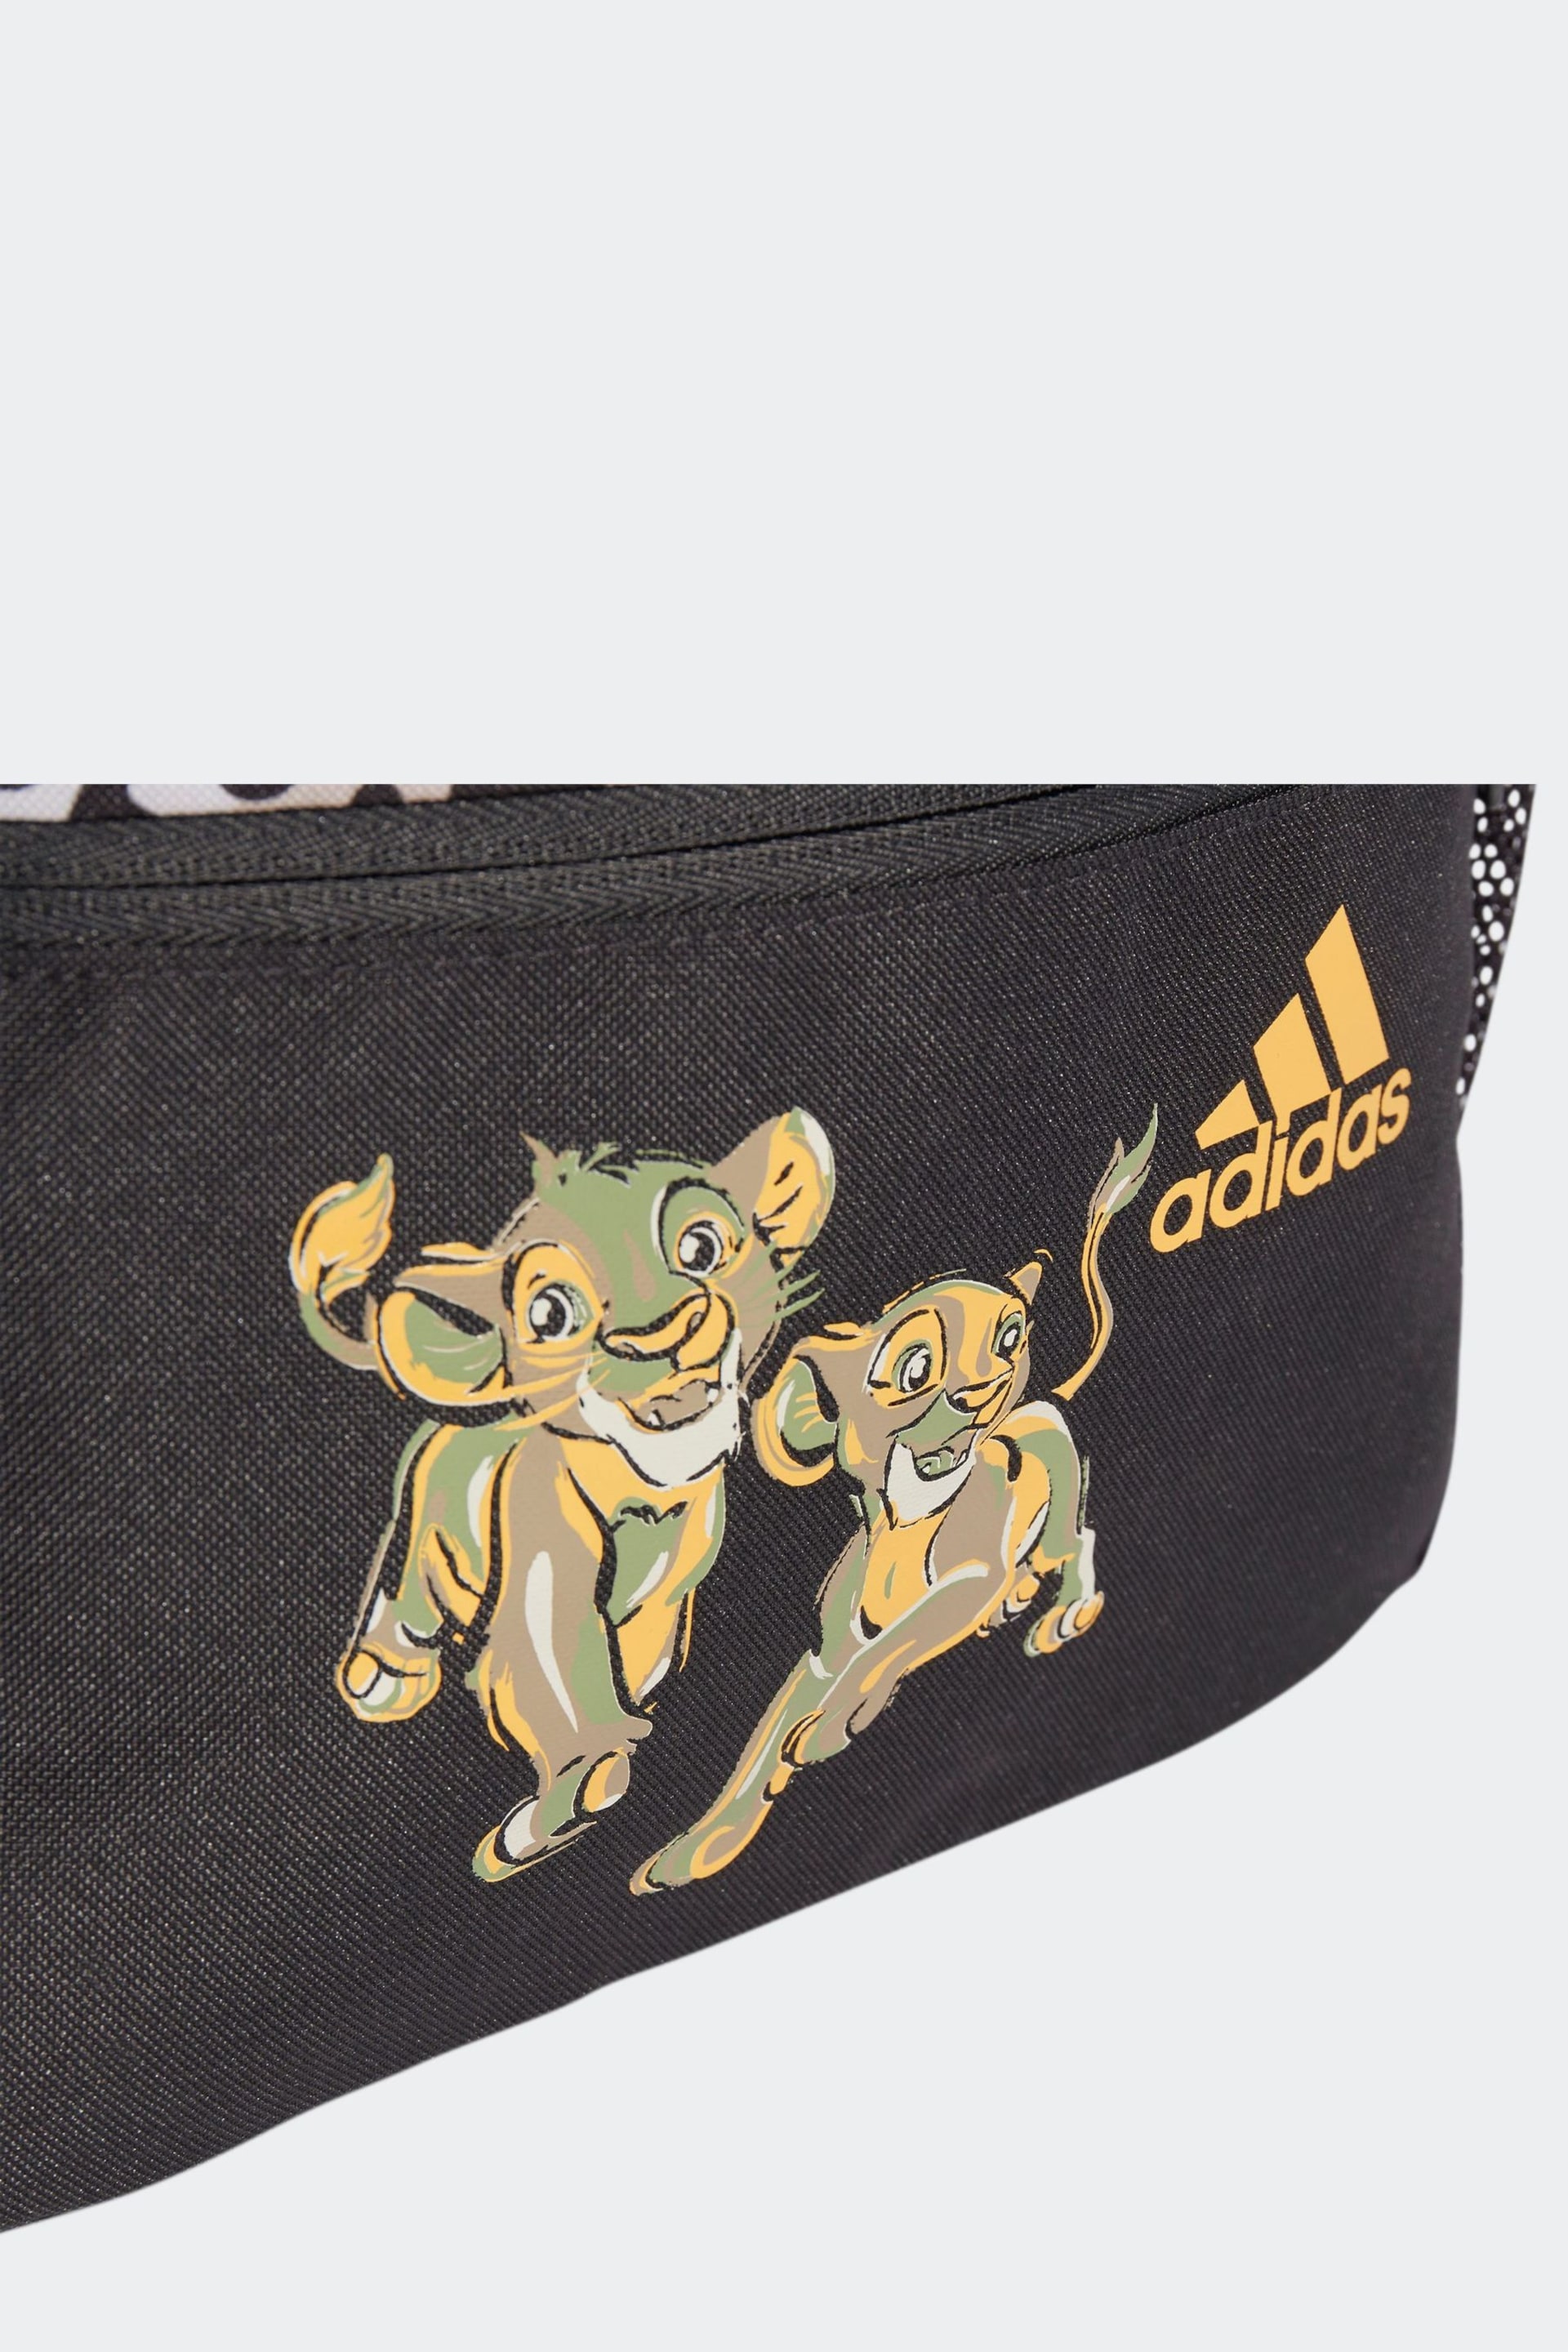 adidas Grey Lion King Backpack - Image 4 of 7